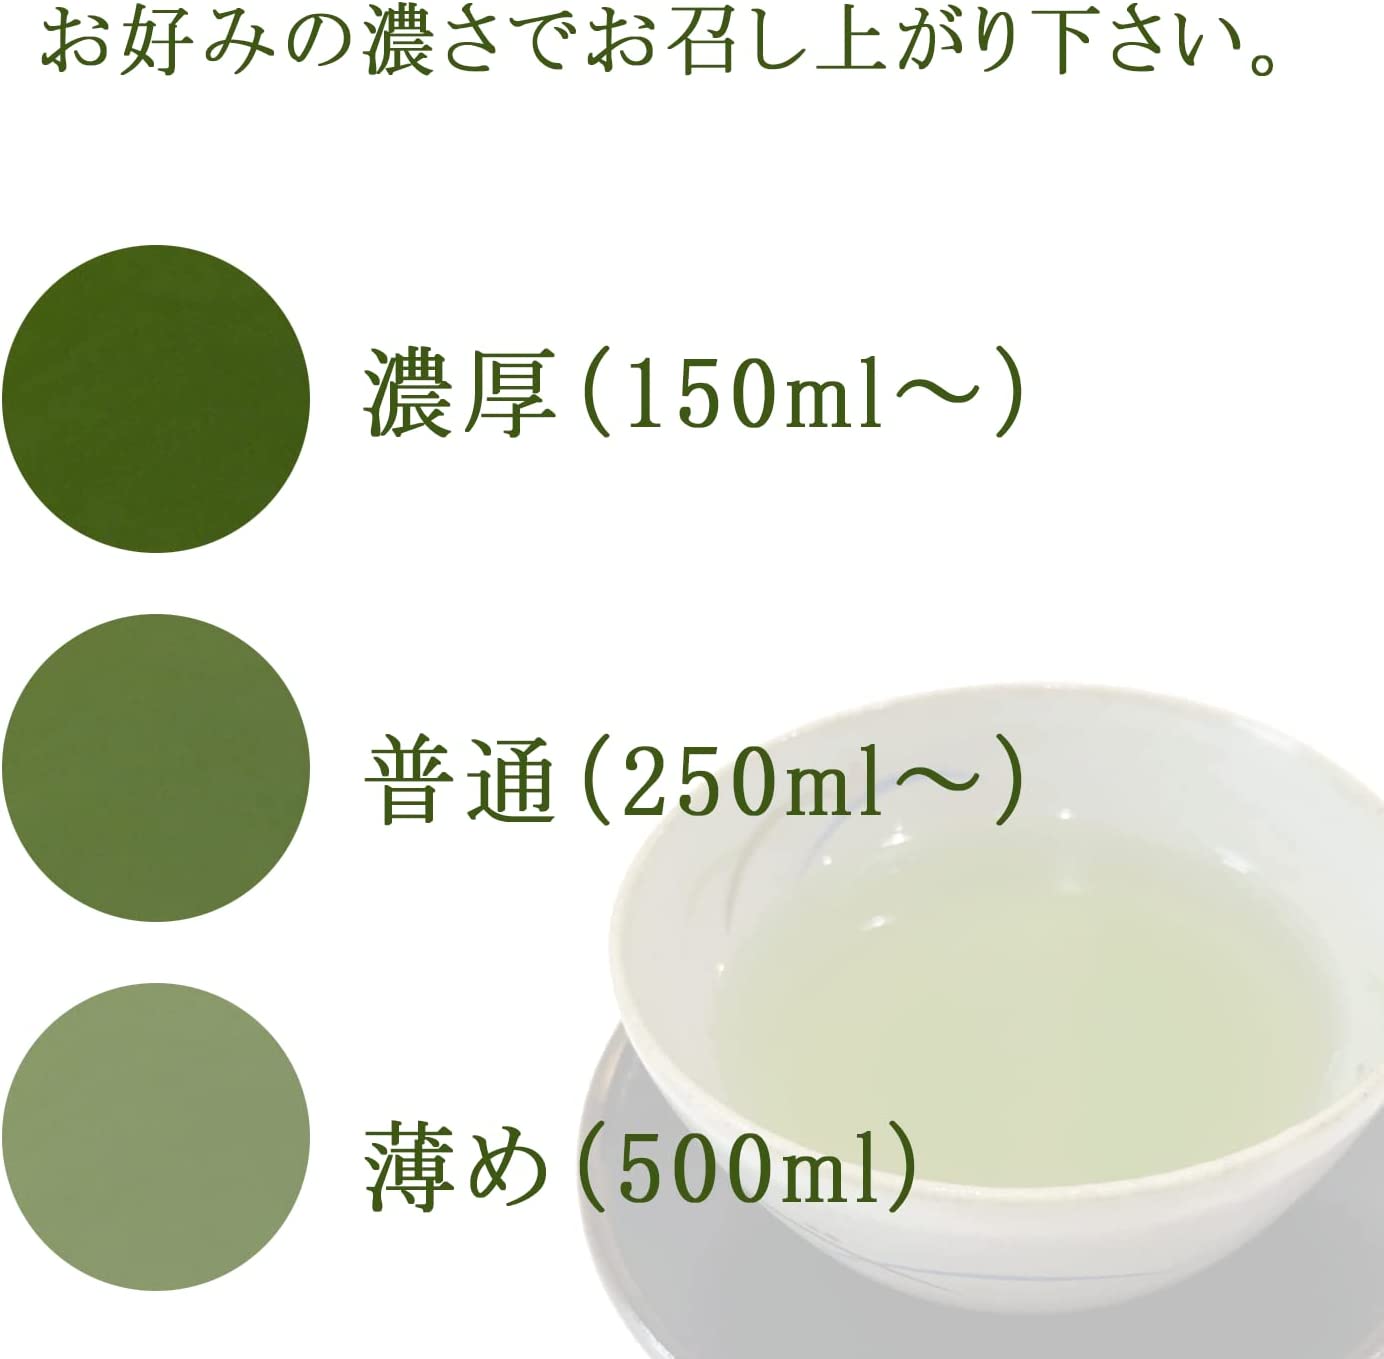 Shizuoka Ichibancha Ryokucha Green Tea Tea Bags with Matcha Additives-free, Colorants-free, Can be Used with Hot or Cold Water, Easy-to-make Tea 5g x 45P - NihonMura